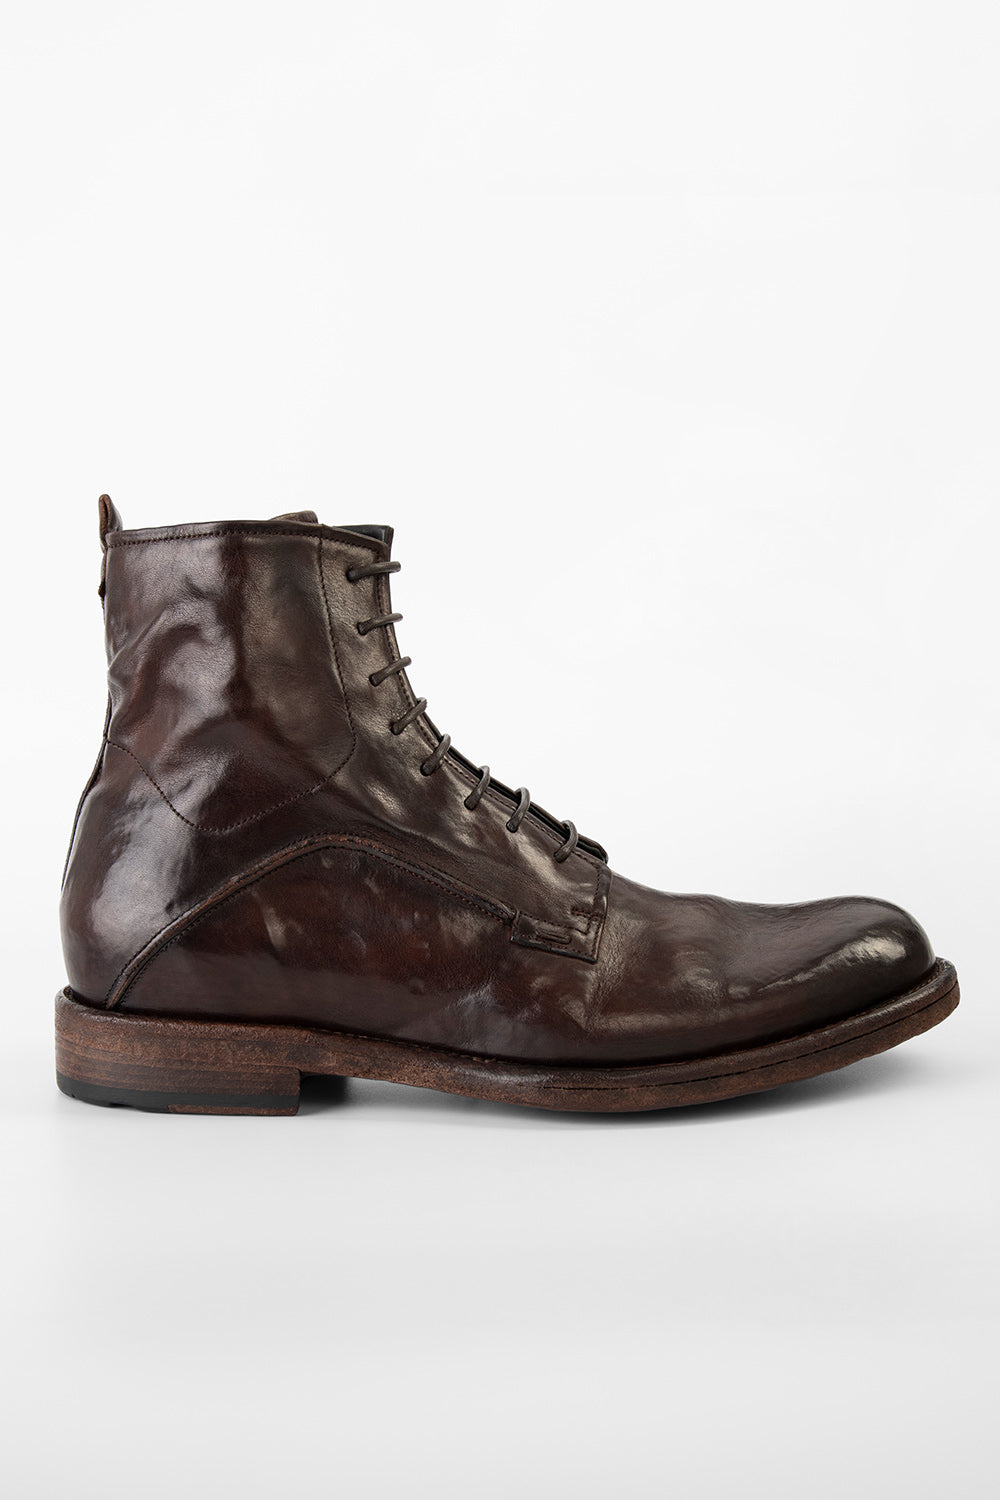 dark brown boots | untamed – UNTAMED STREET